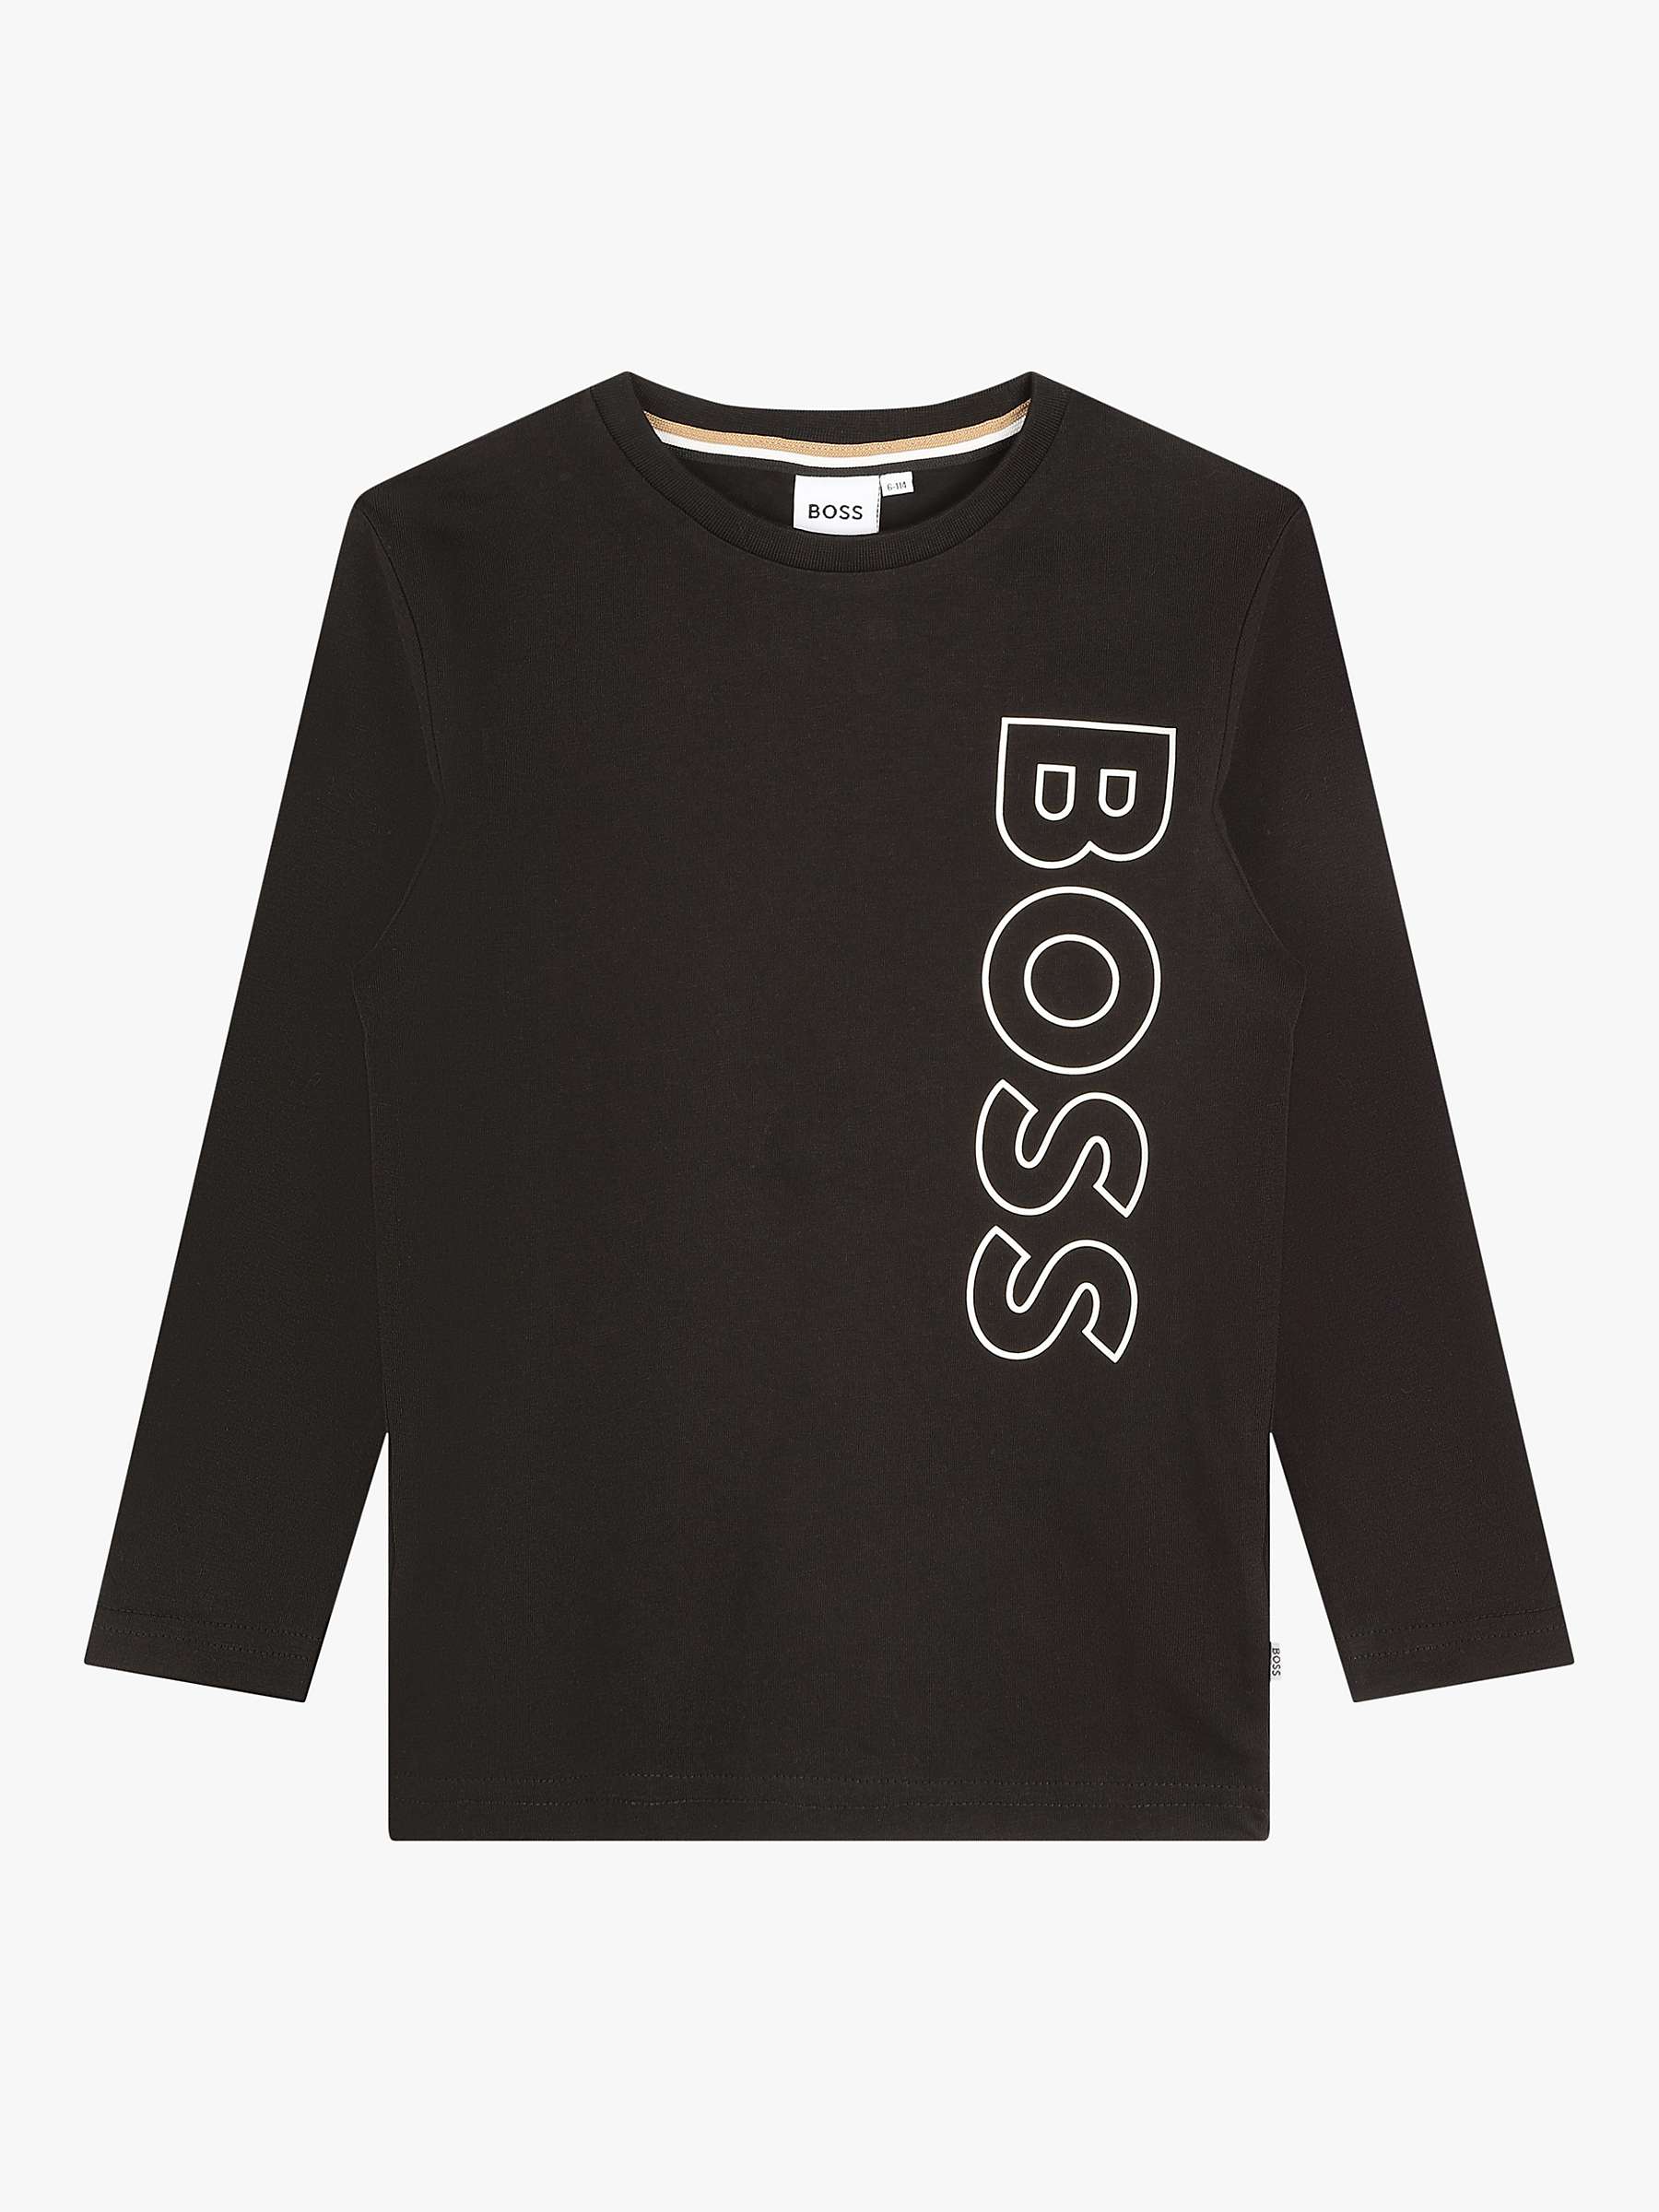 Buy BOSS Kids' Logo Long Sleeve T-Shirt, Black Online at johnlewis.com